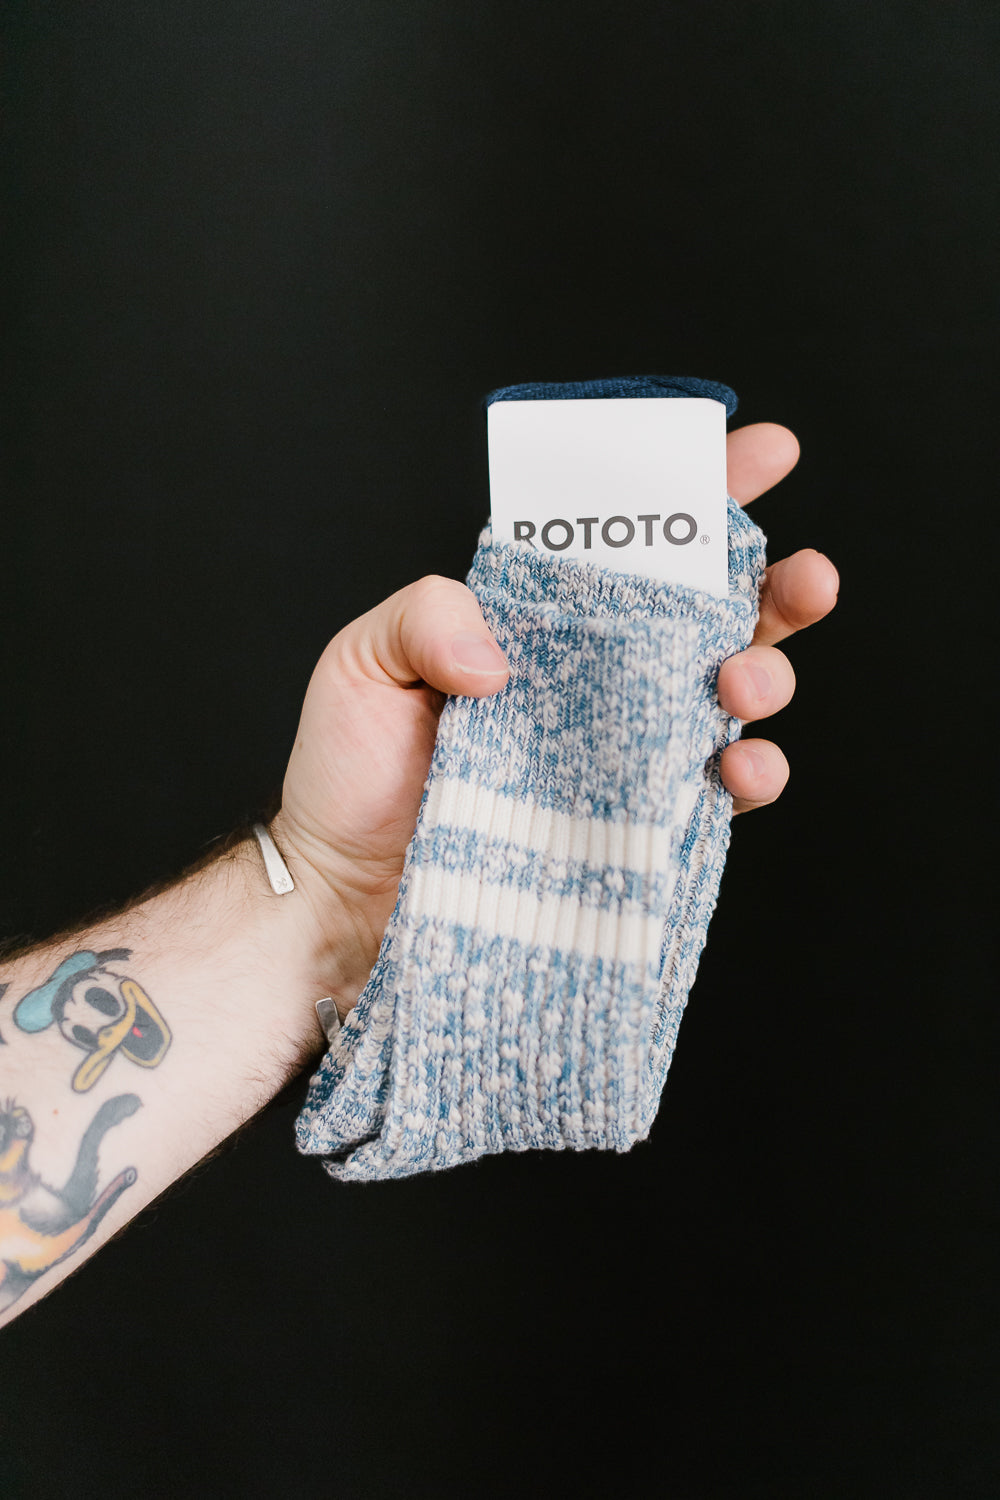 R1485 - OG Cotton Slub Stripe Socks - Blue